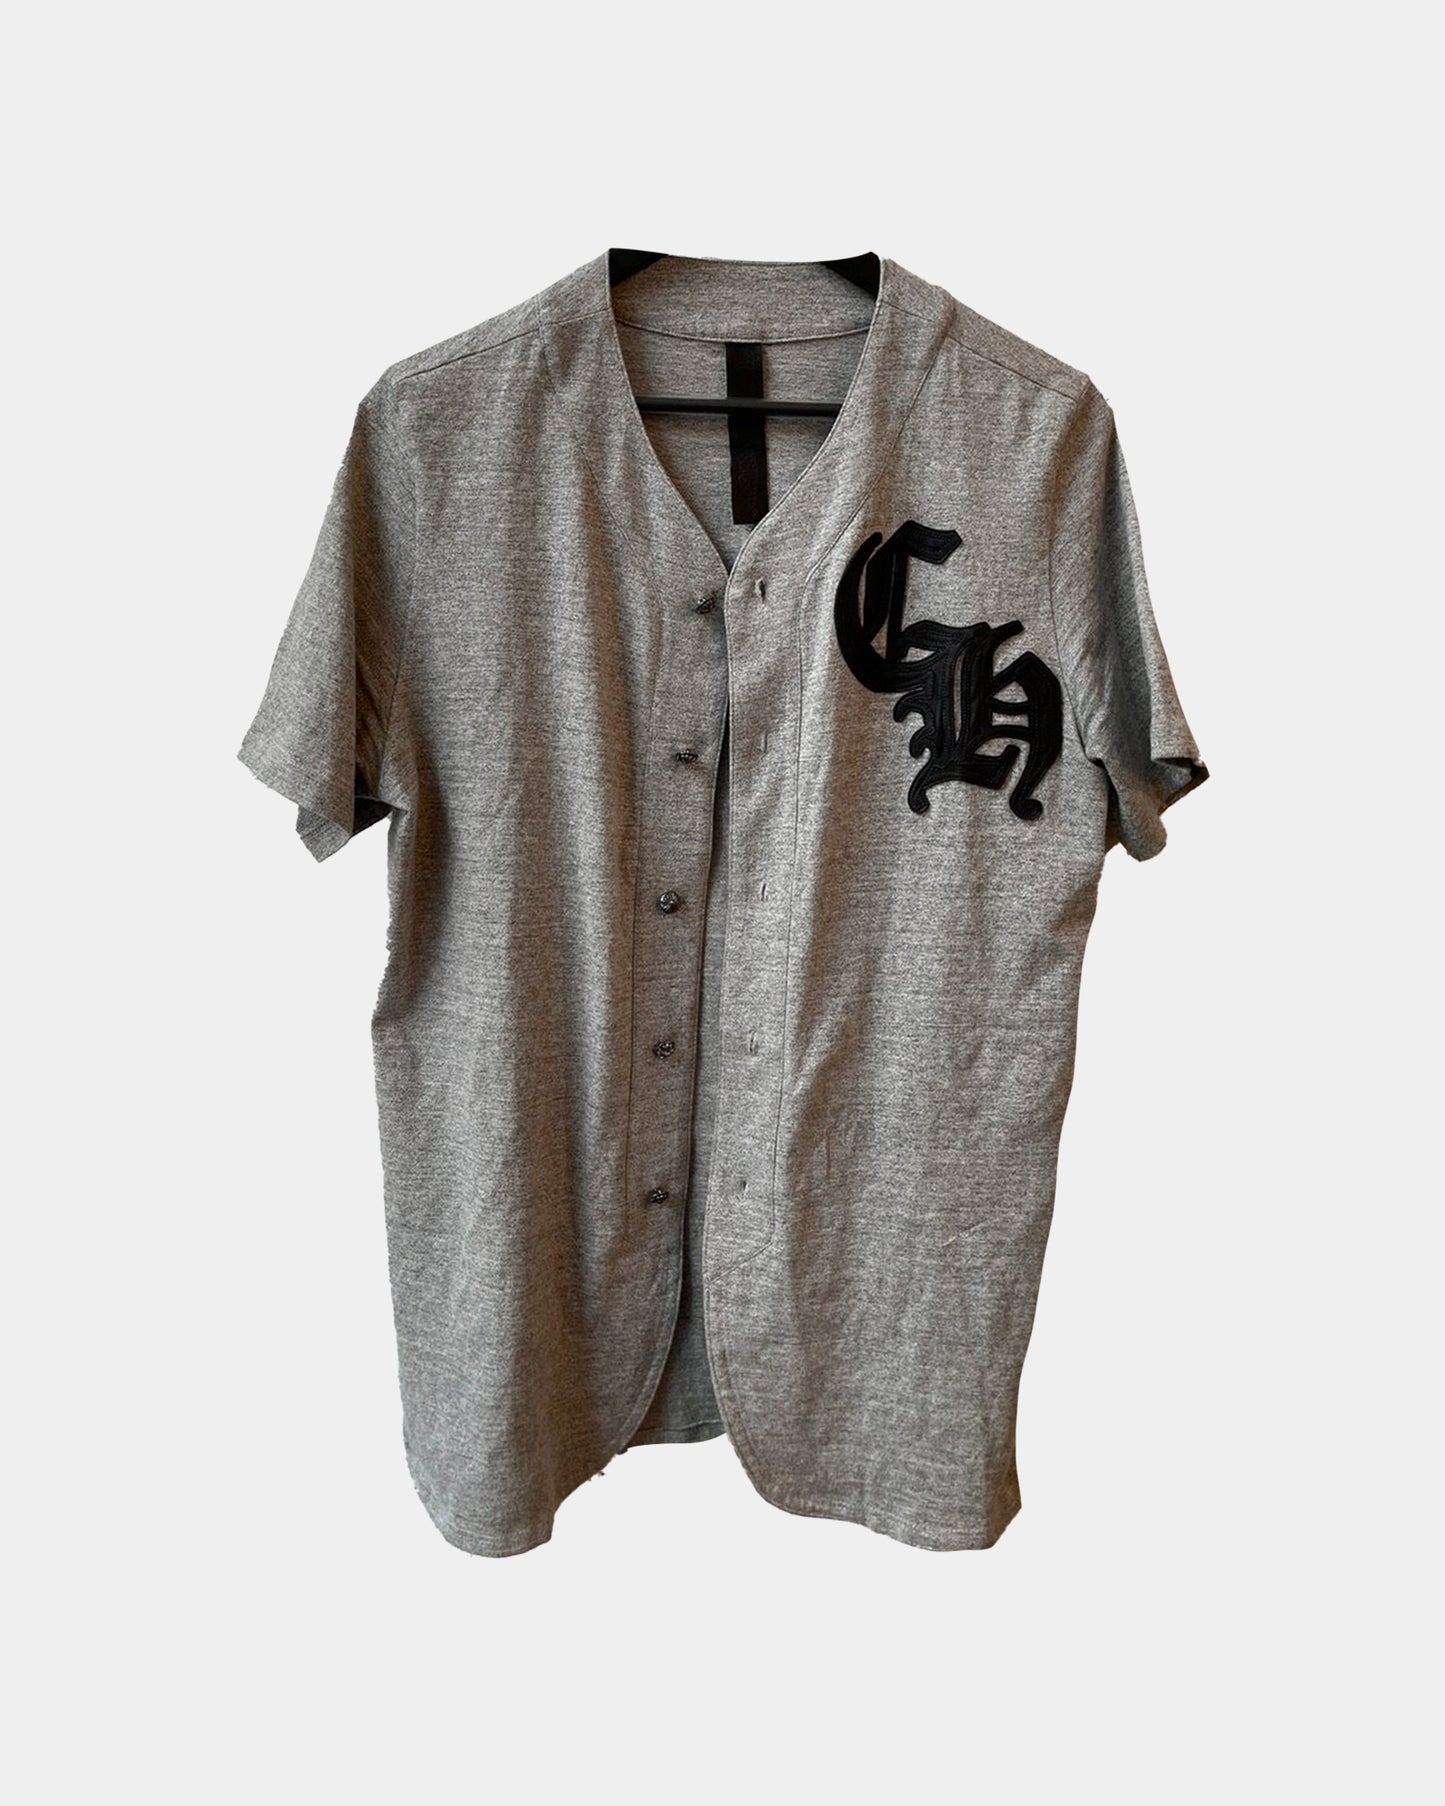 Chrome Hearts CUSTOM Leather Patch Baseball Jersey Shirt